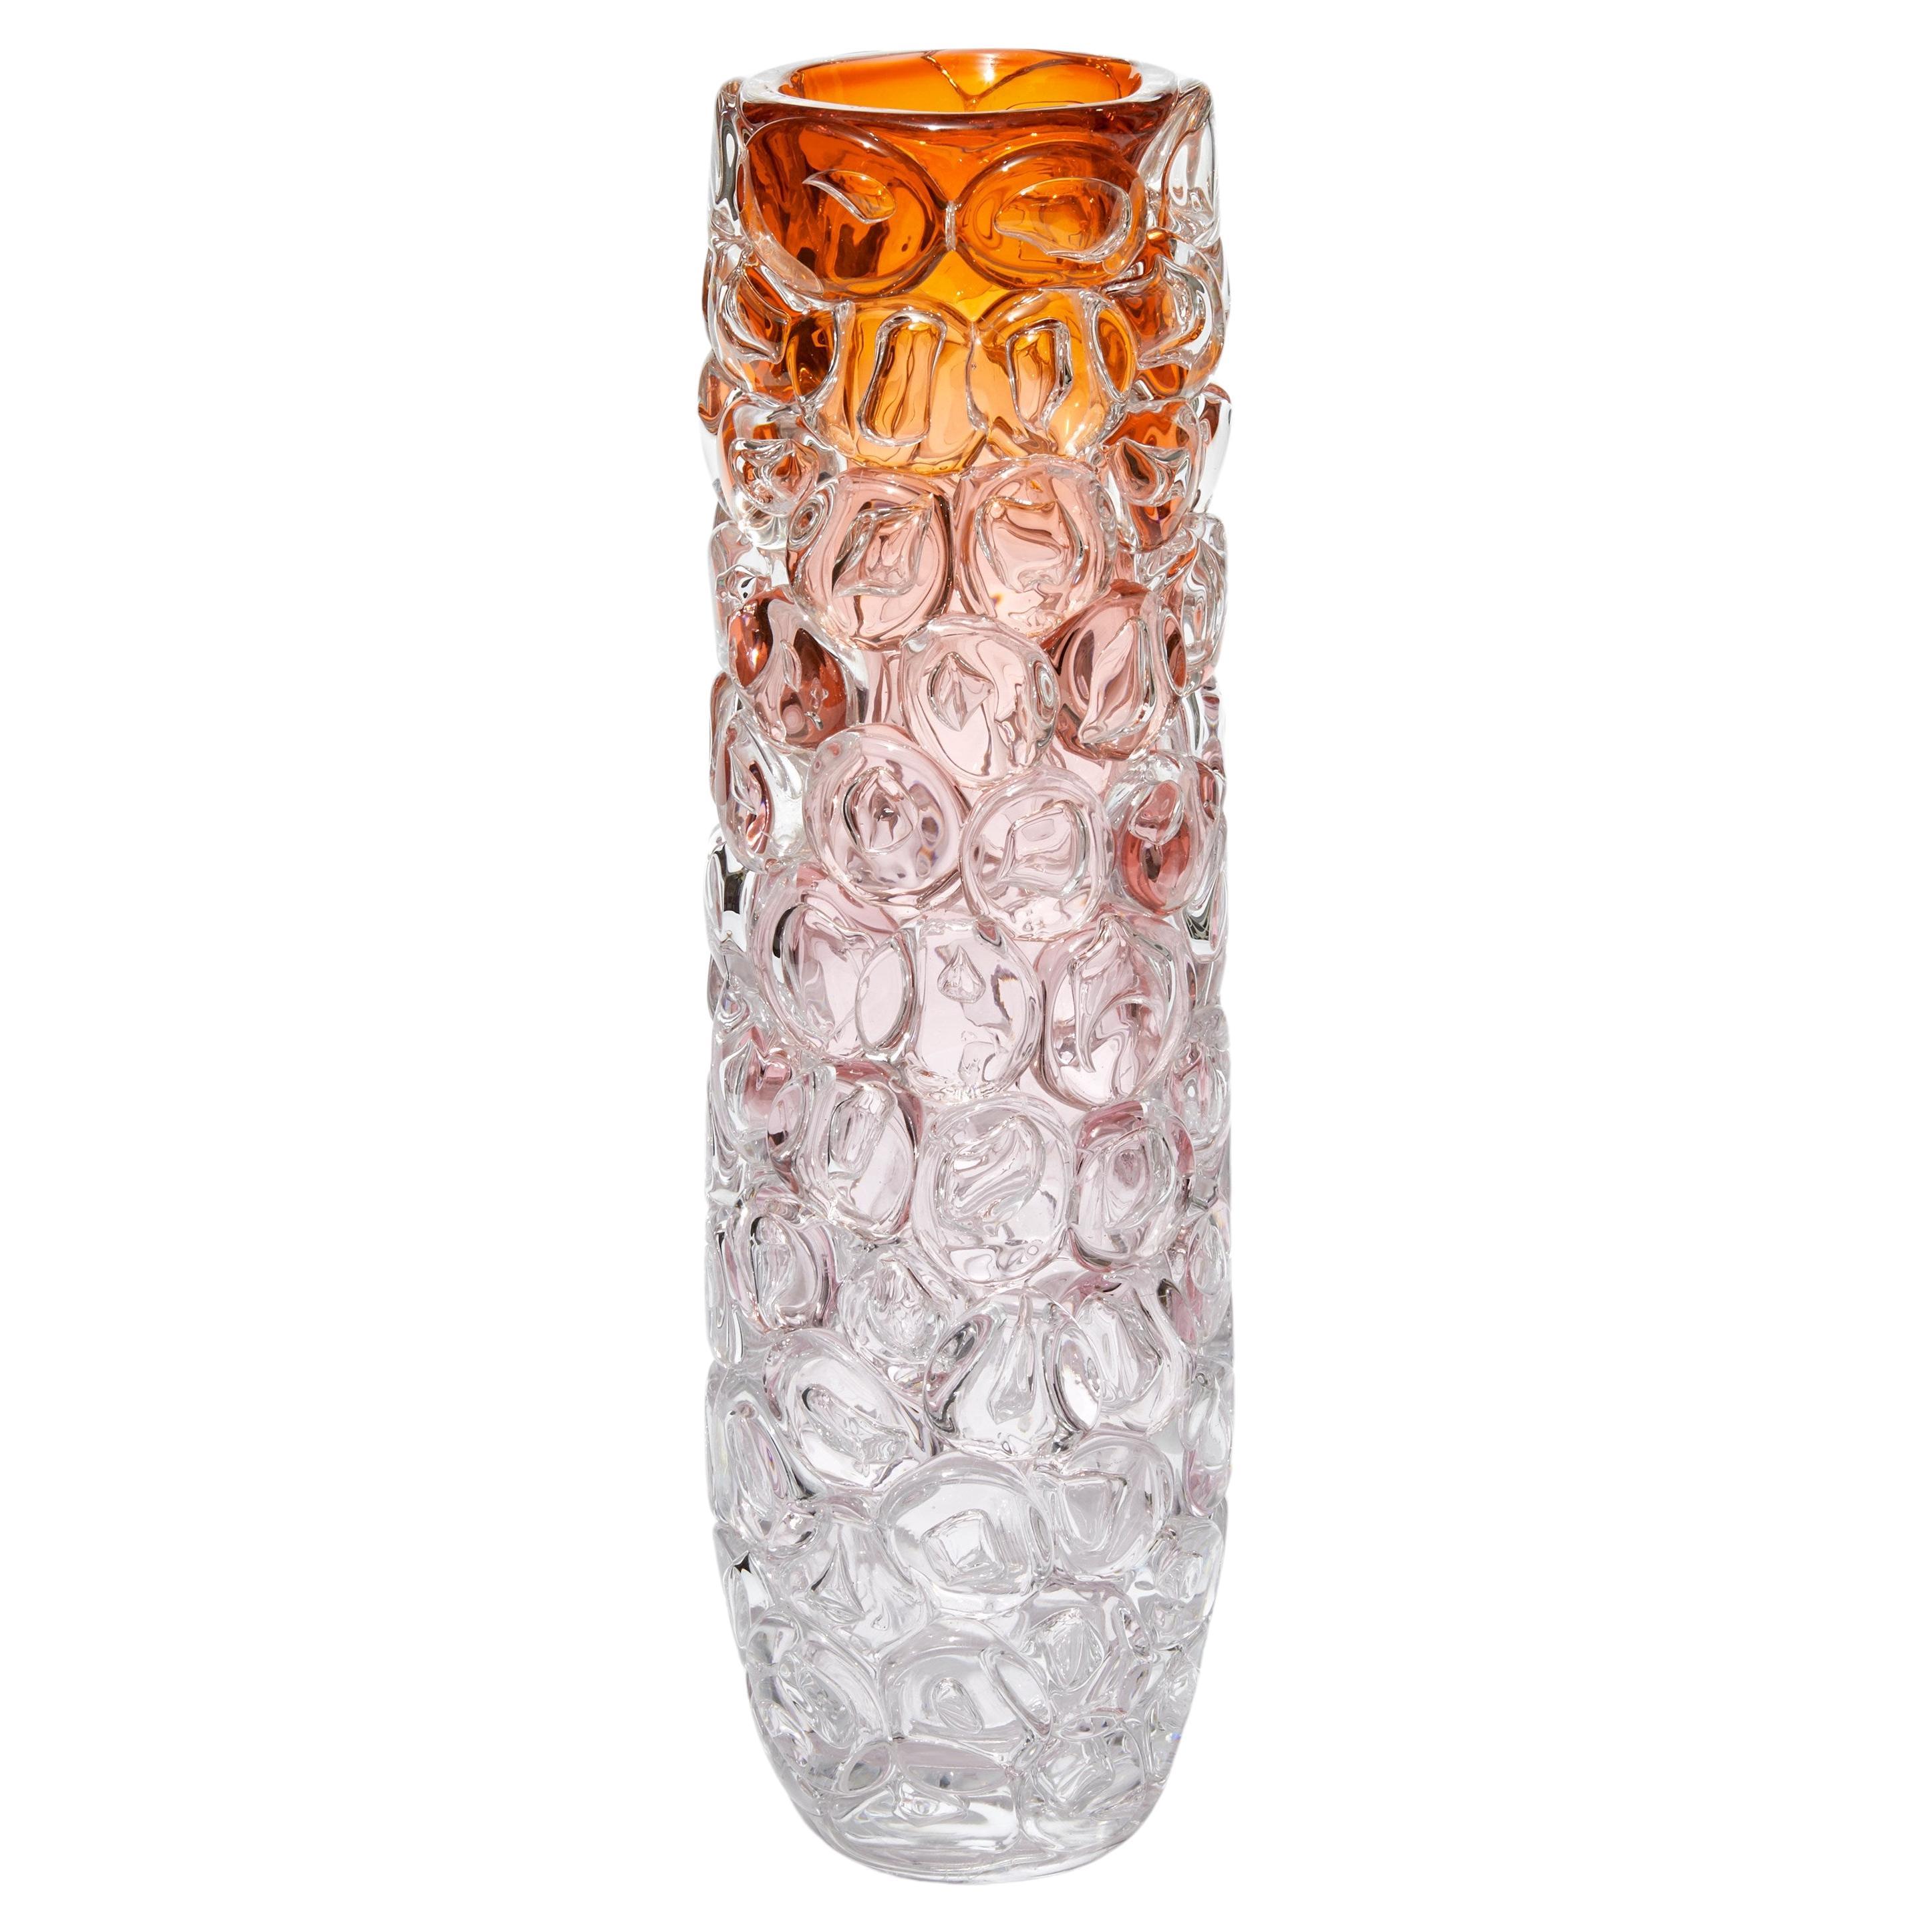 Bubblewrap in Aurora Ascent, pink/orange blown glass vase by Allister Malcolm